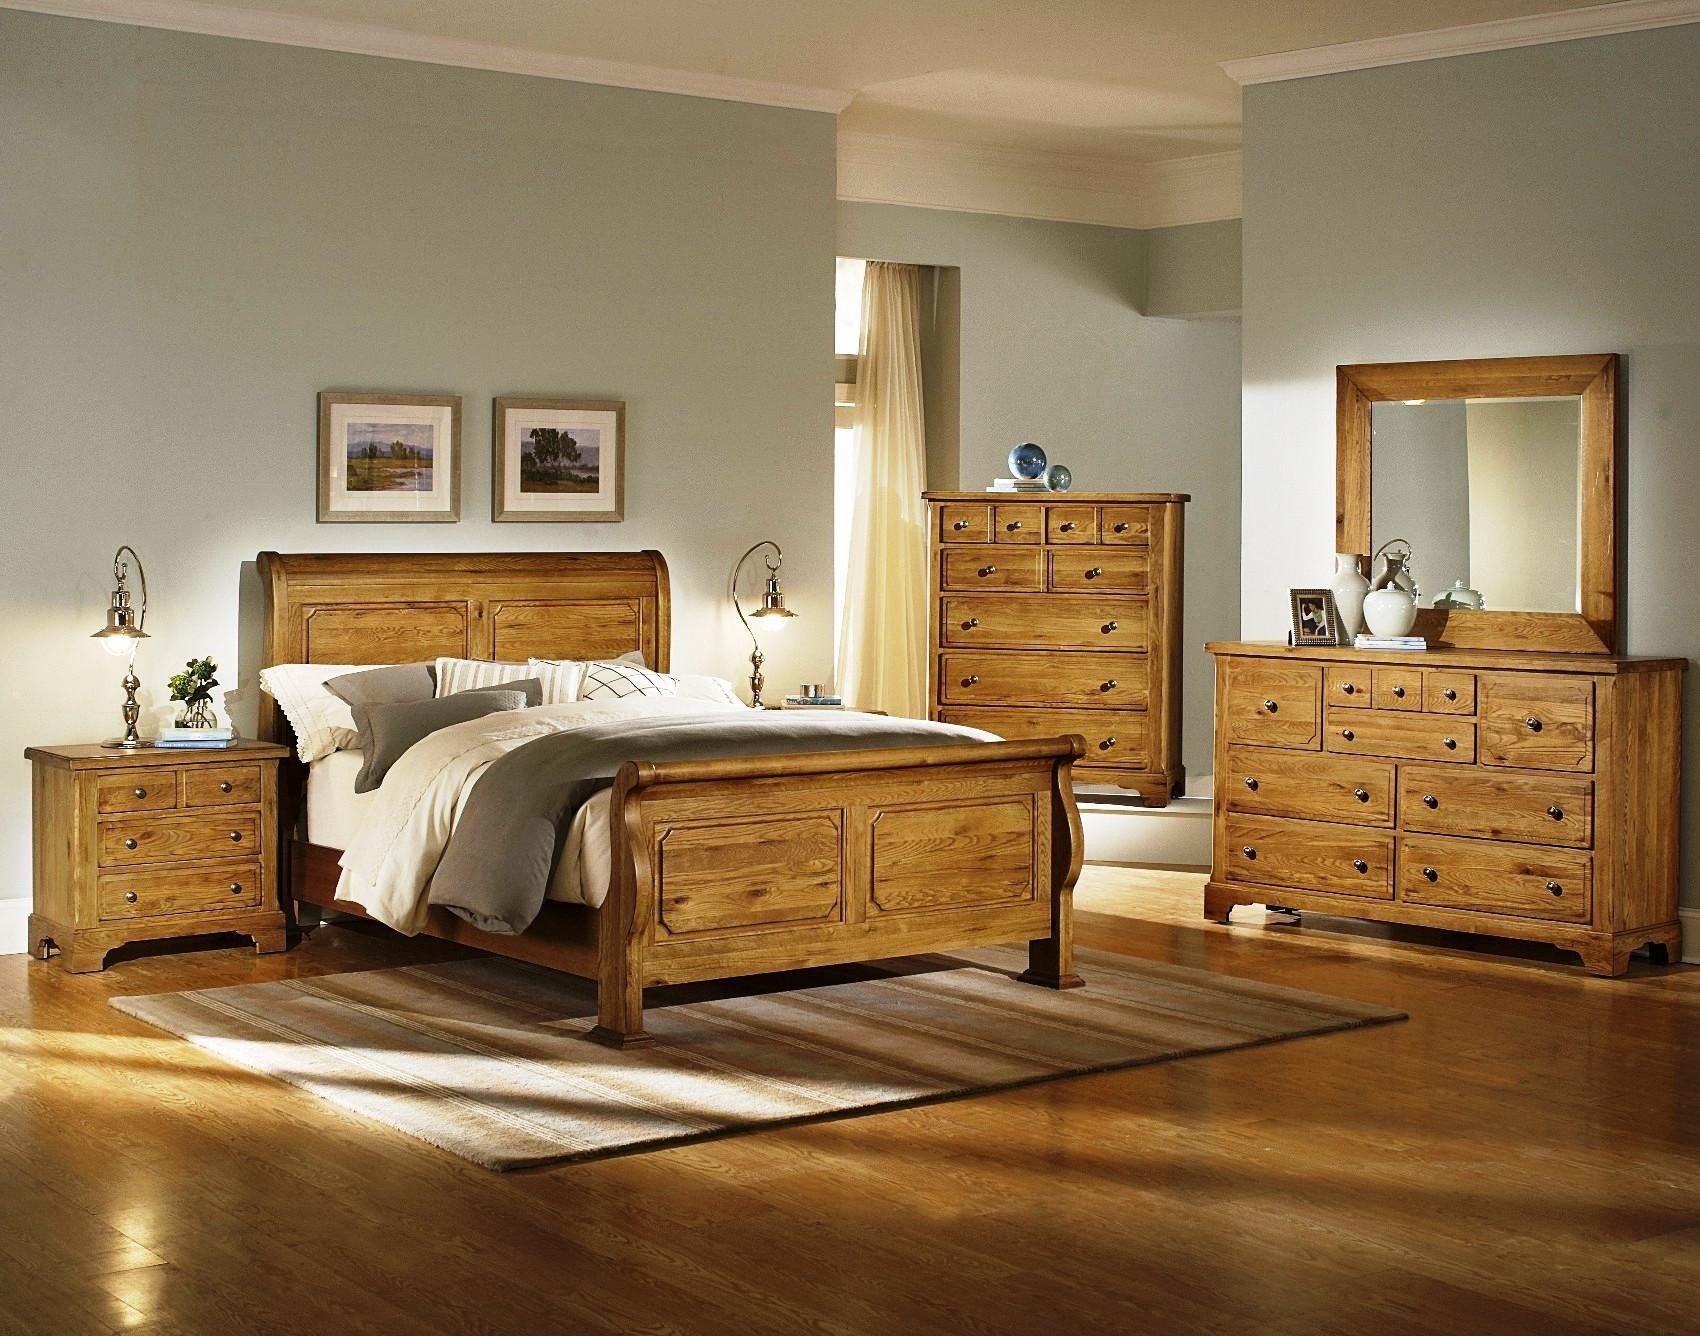 Modern Bedroom With Oak Furniture